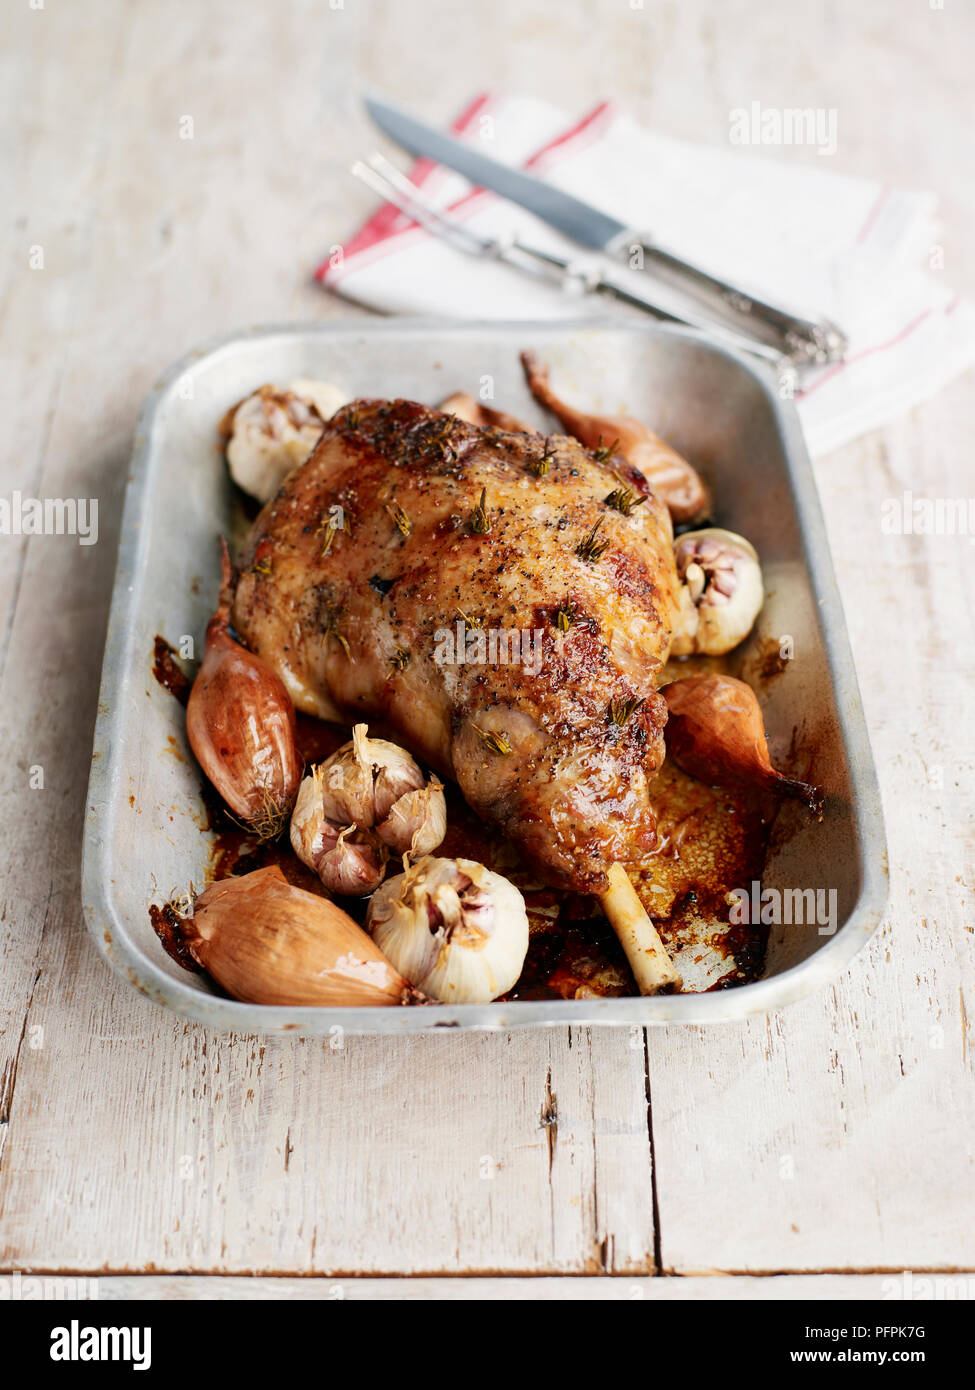 Roasted leg of lamb in roasting pan Stock Photo